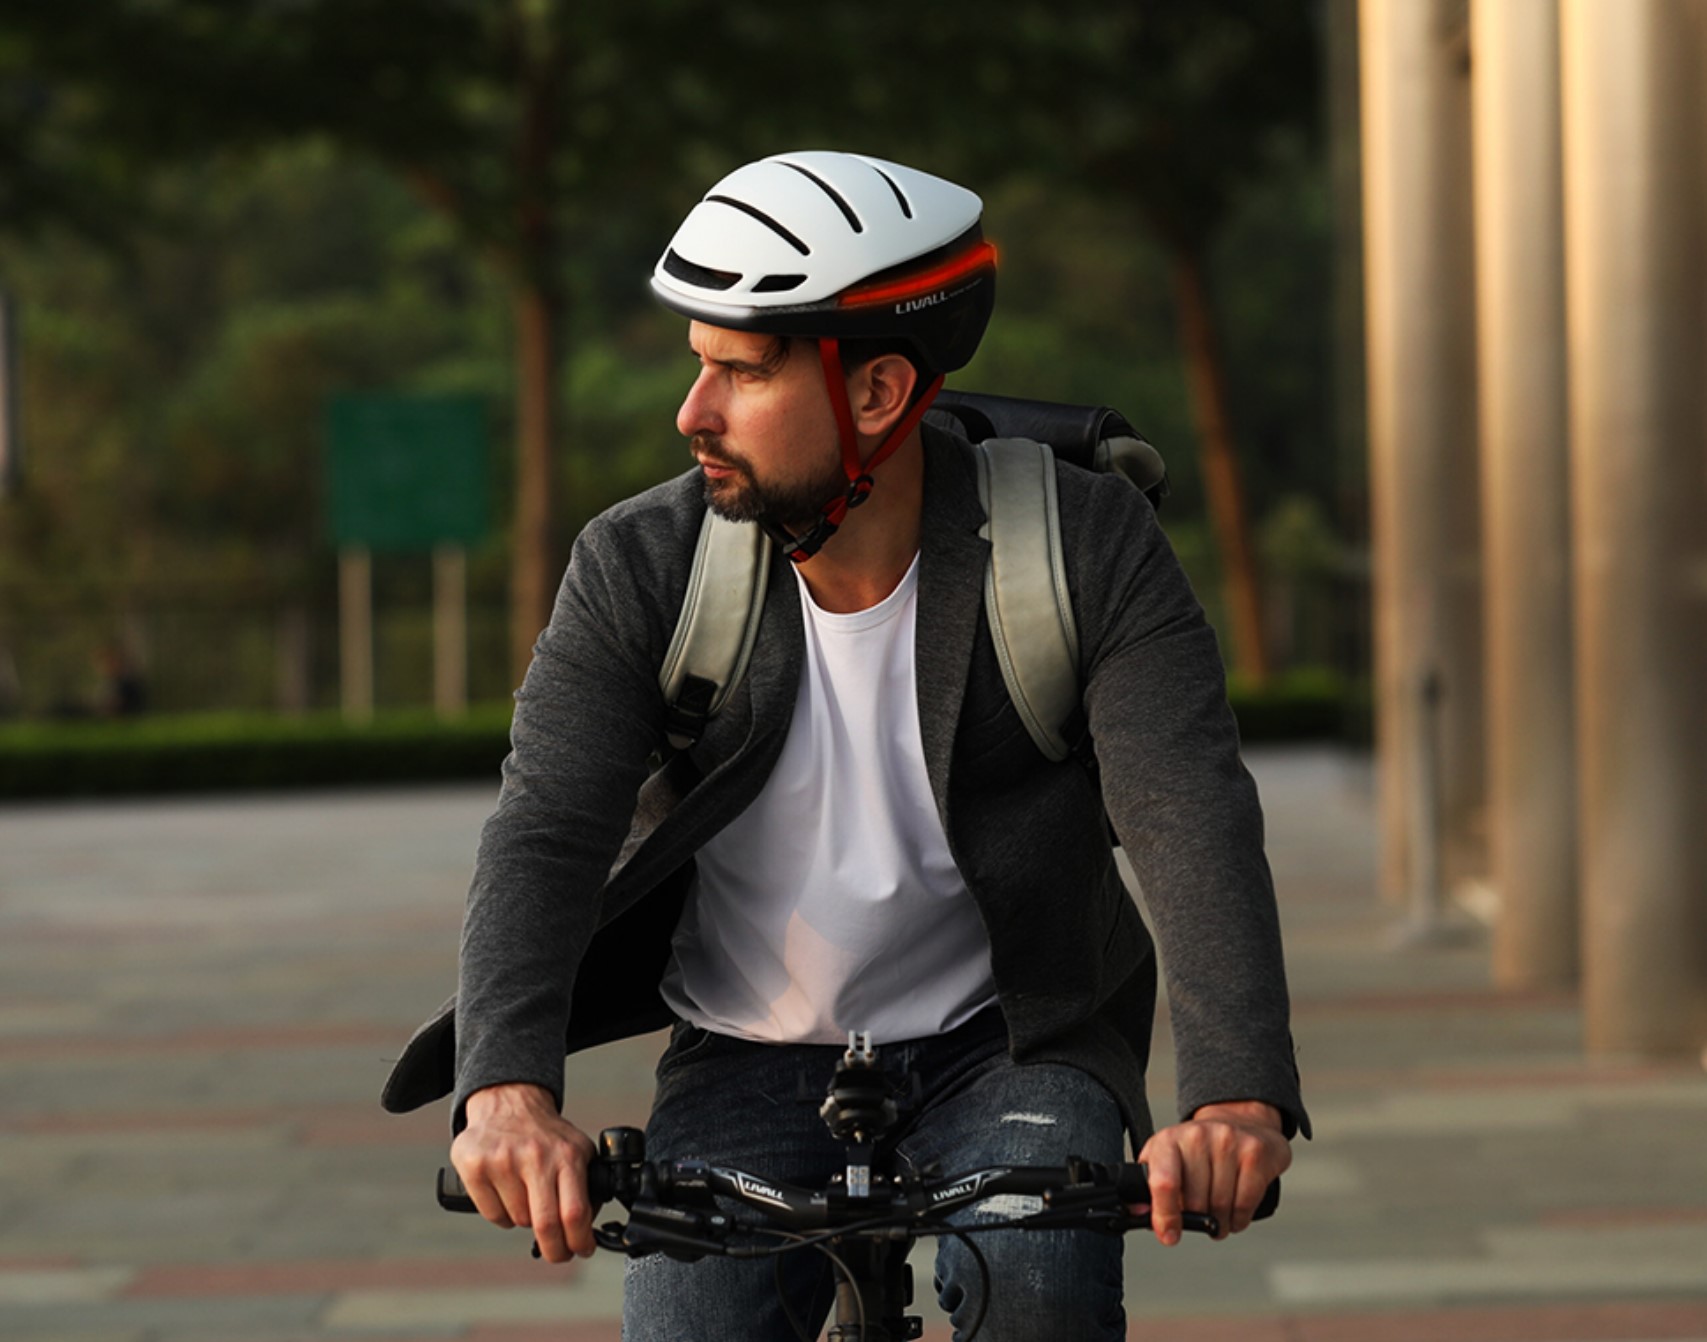 Livall EVO21 smart cycle helmet has top tough tech (review)